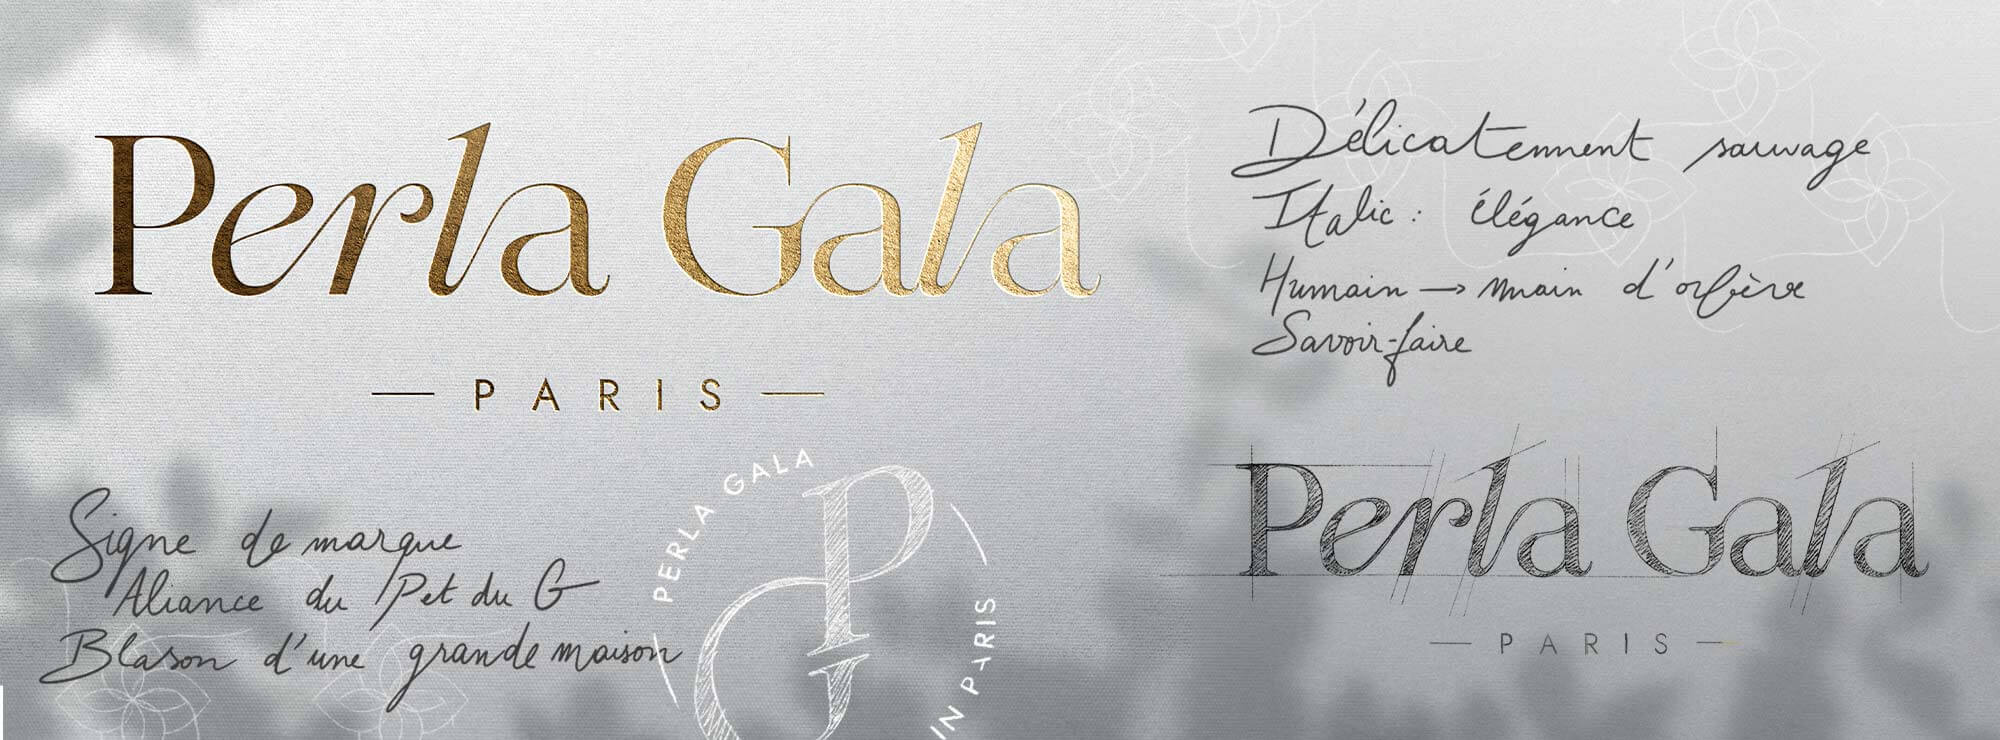 Perla Gala - a little jewel of a brand